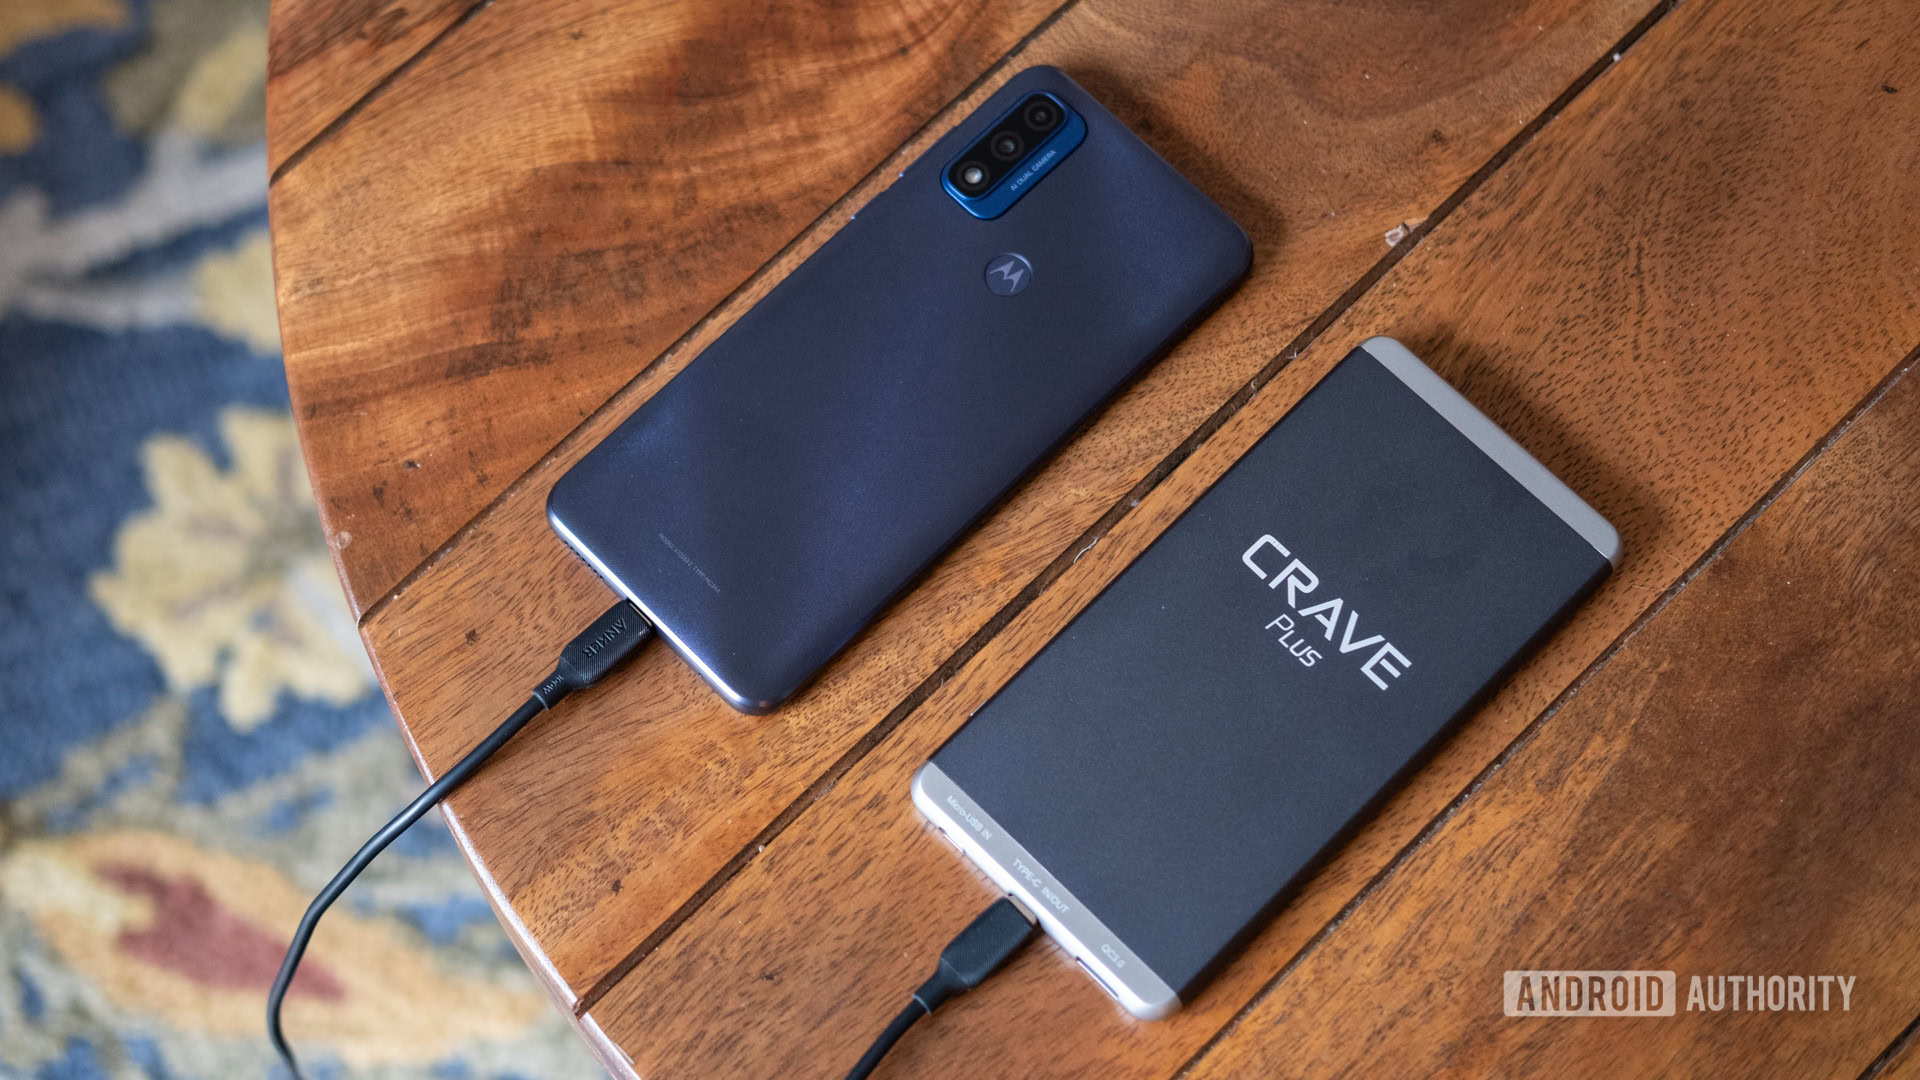 The Crave Plus charging the Motorola Moto G Pure